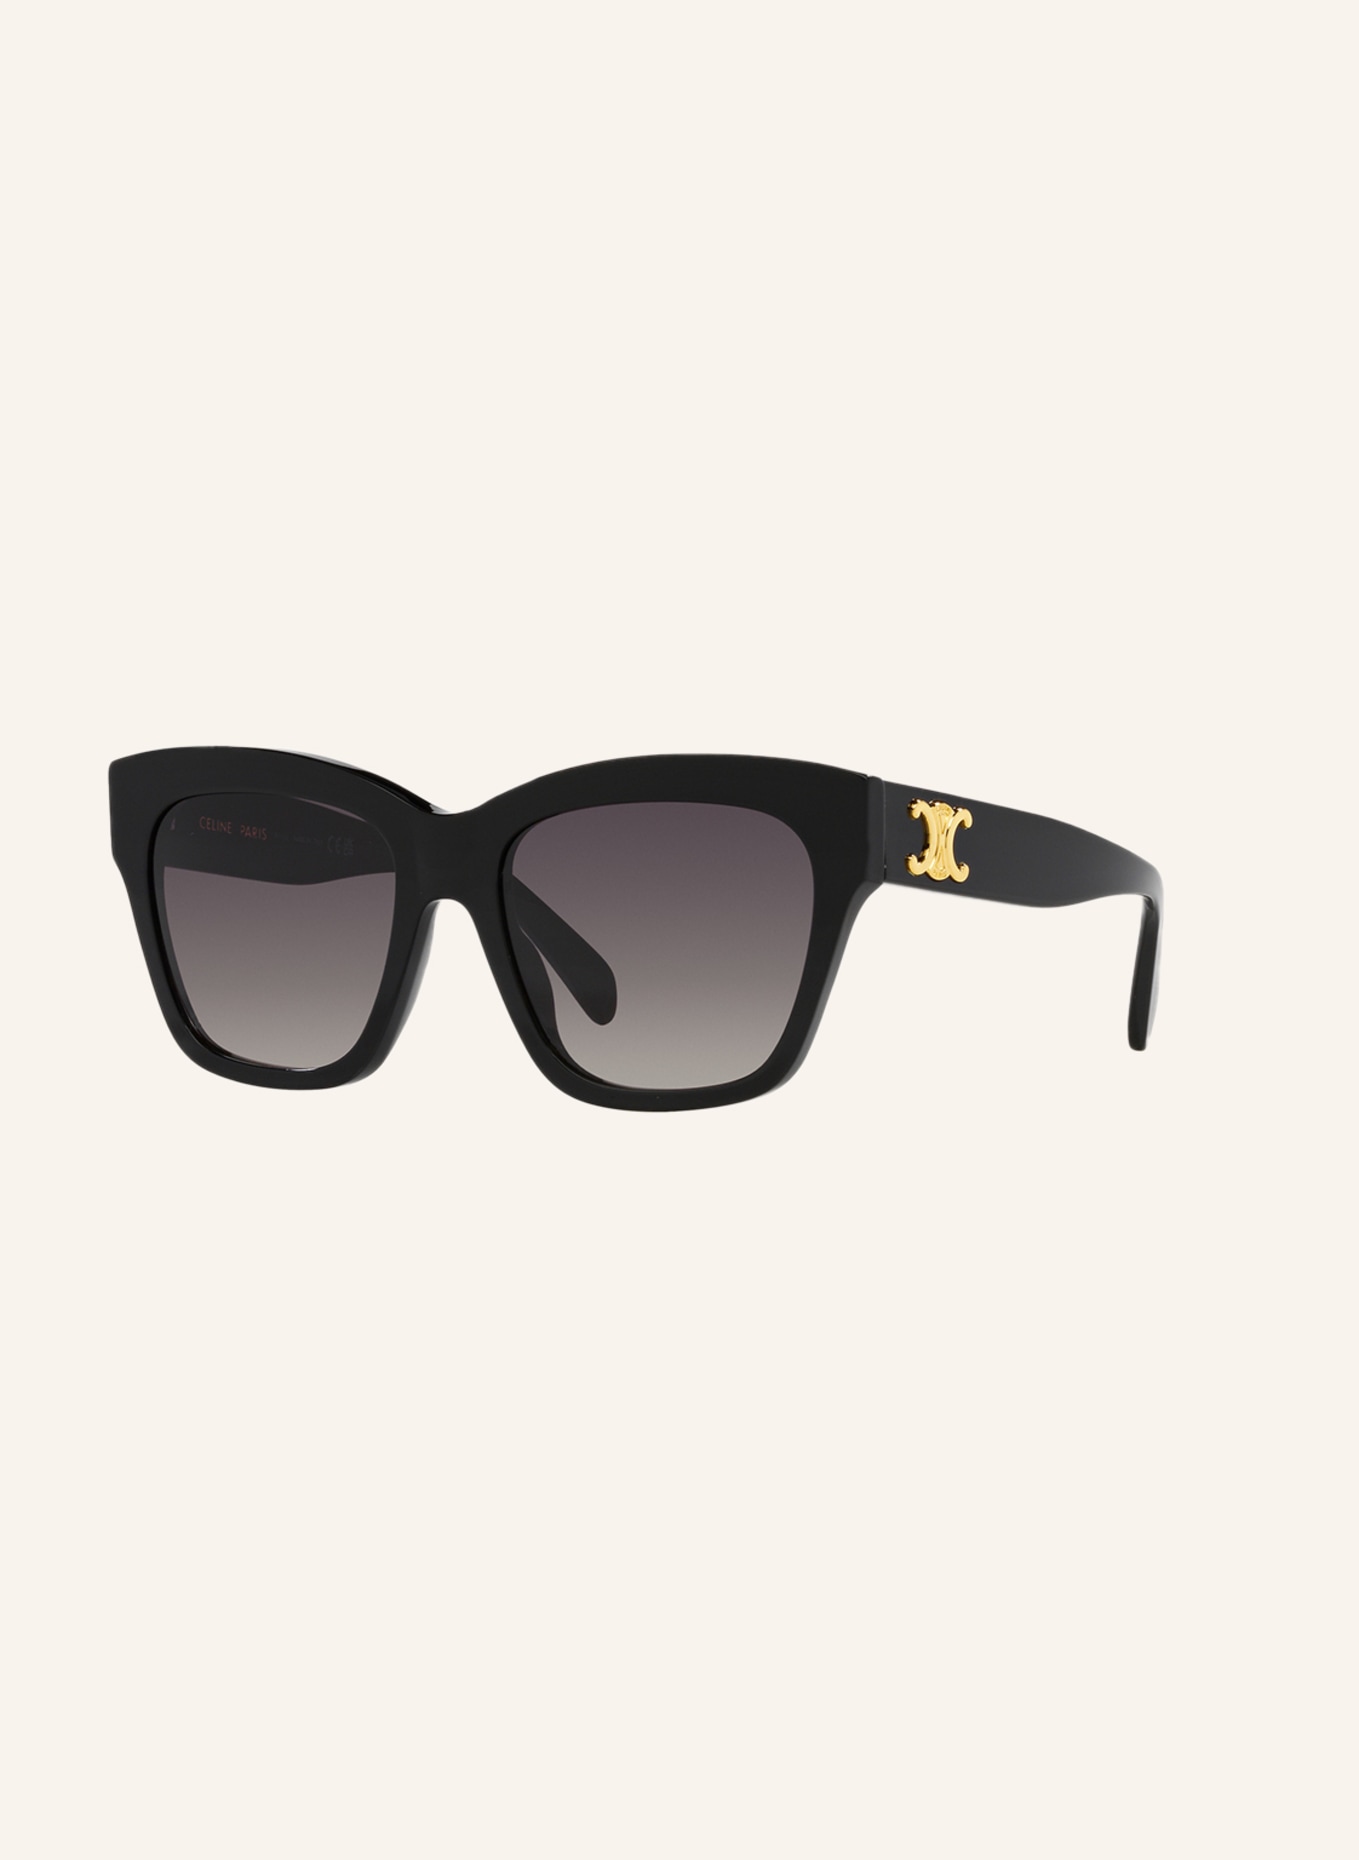 CELINE Sunglasses CL000403 TRIOMPHE in 1100d1 - black/ brown